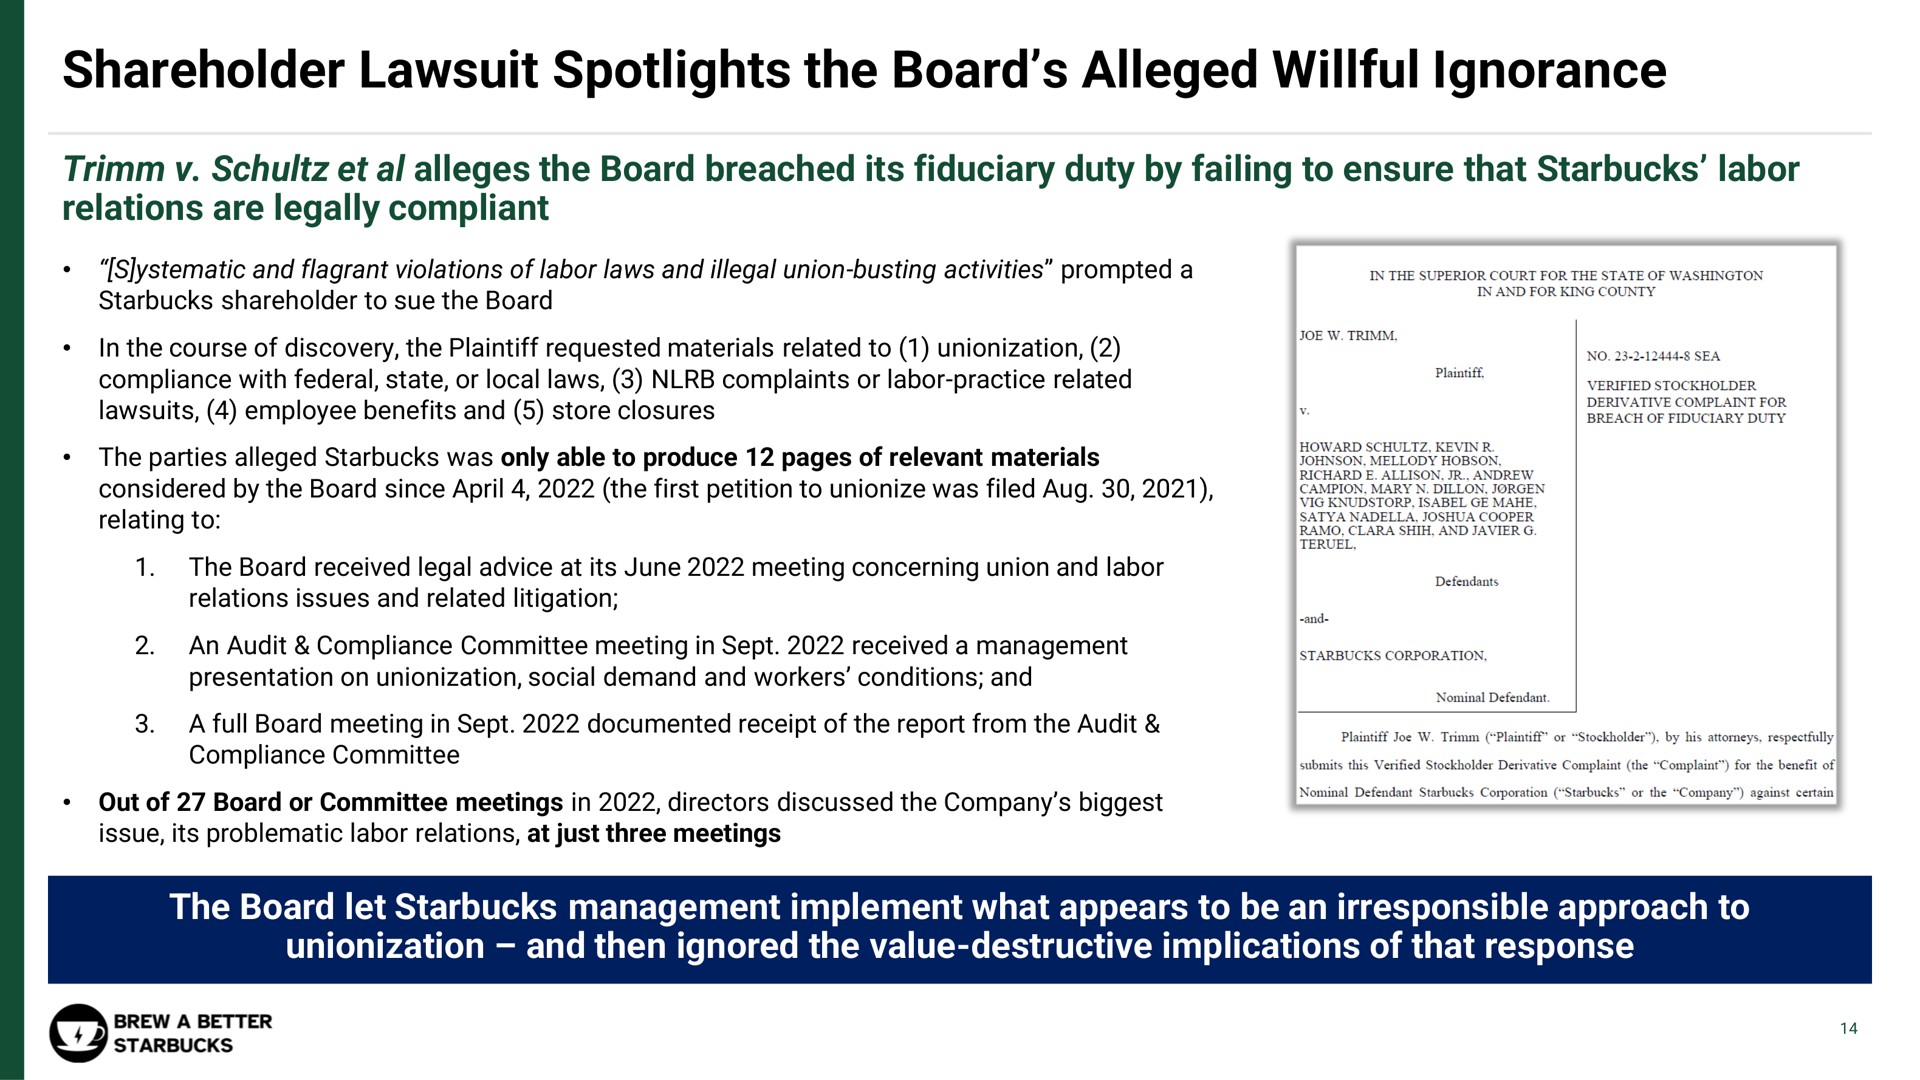 shareholder lawsuit spotlights the board alleged willful ignorance | Strategic Organizing Center